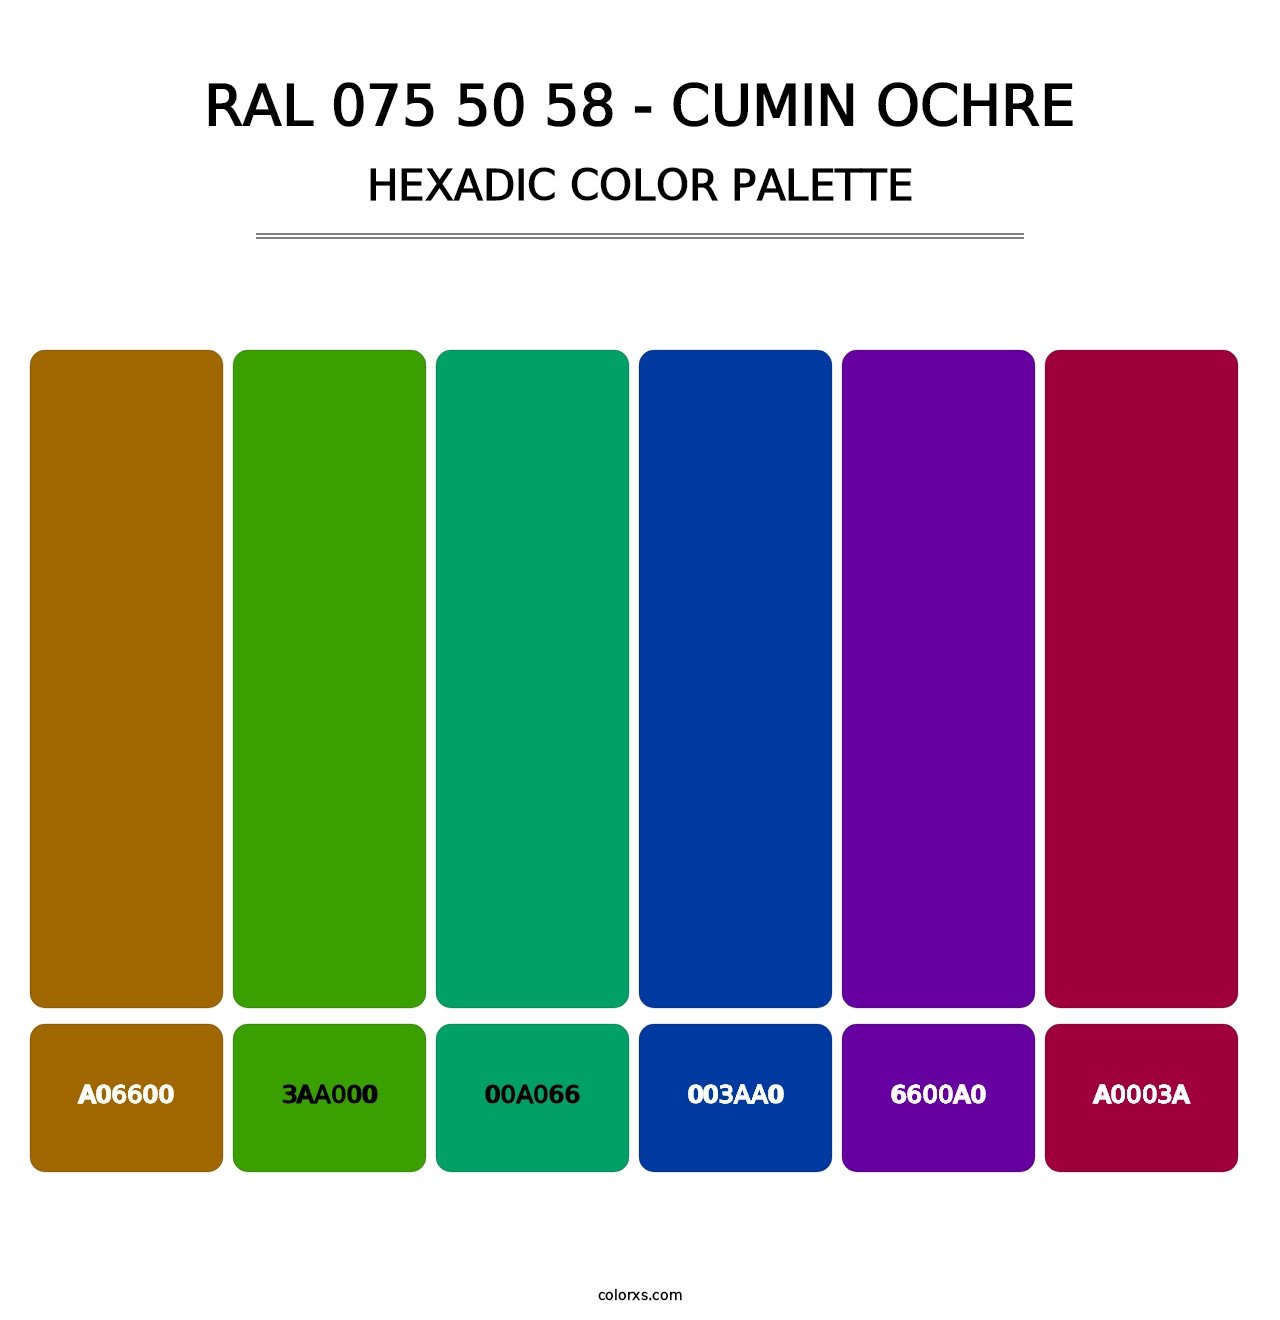 RAL 075 50 58 - Cumin Ochre - Hexadic Color Palette